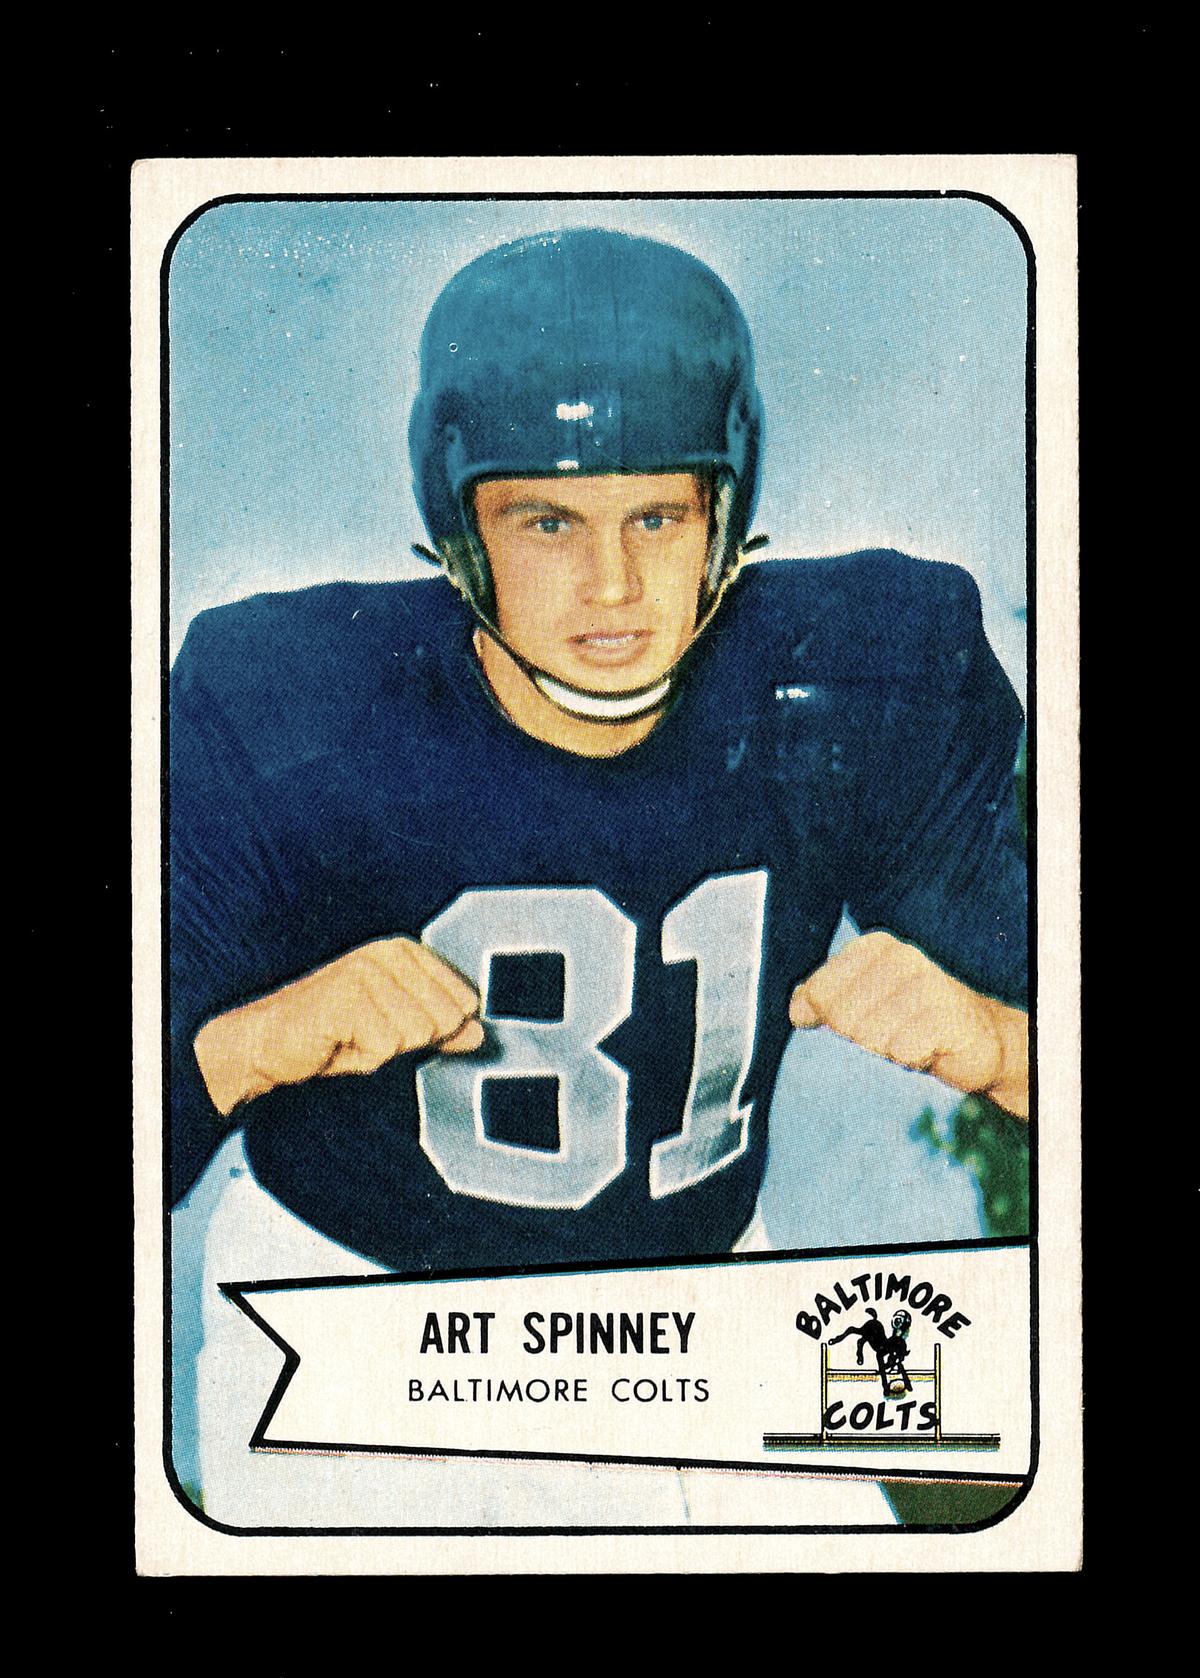 1954 Bowman Football Card #126 Art Spinney Baltimore Colts.